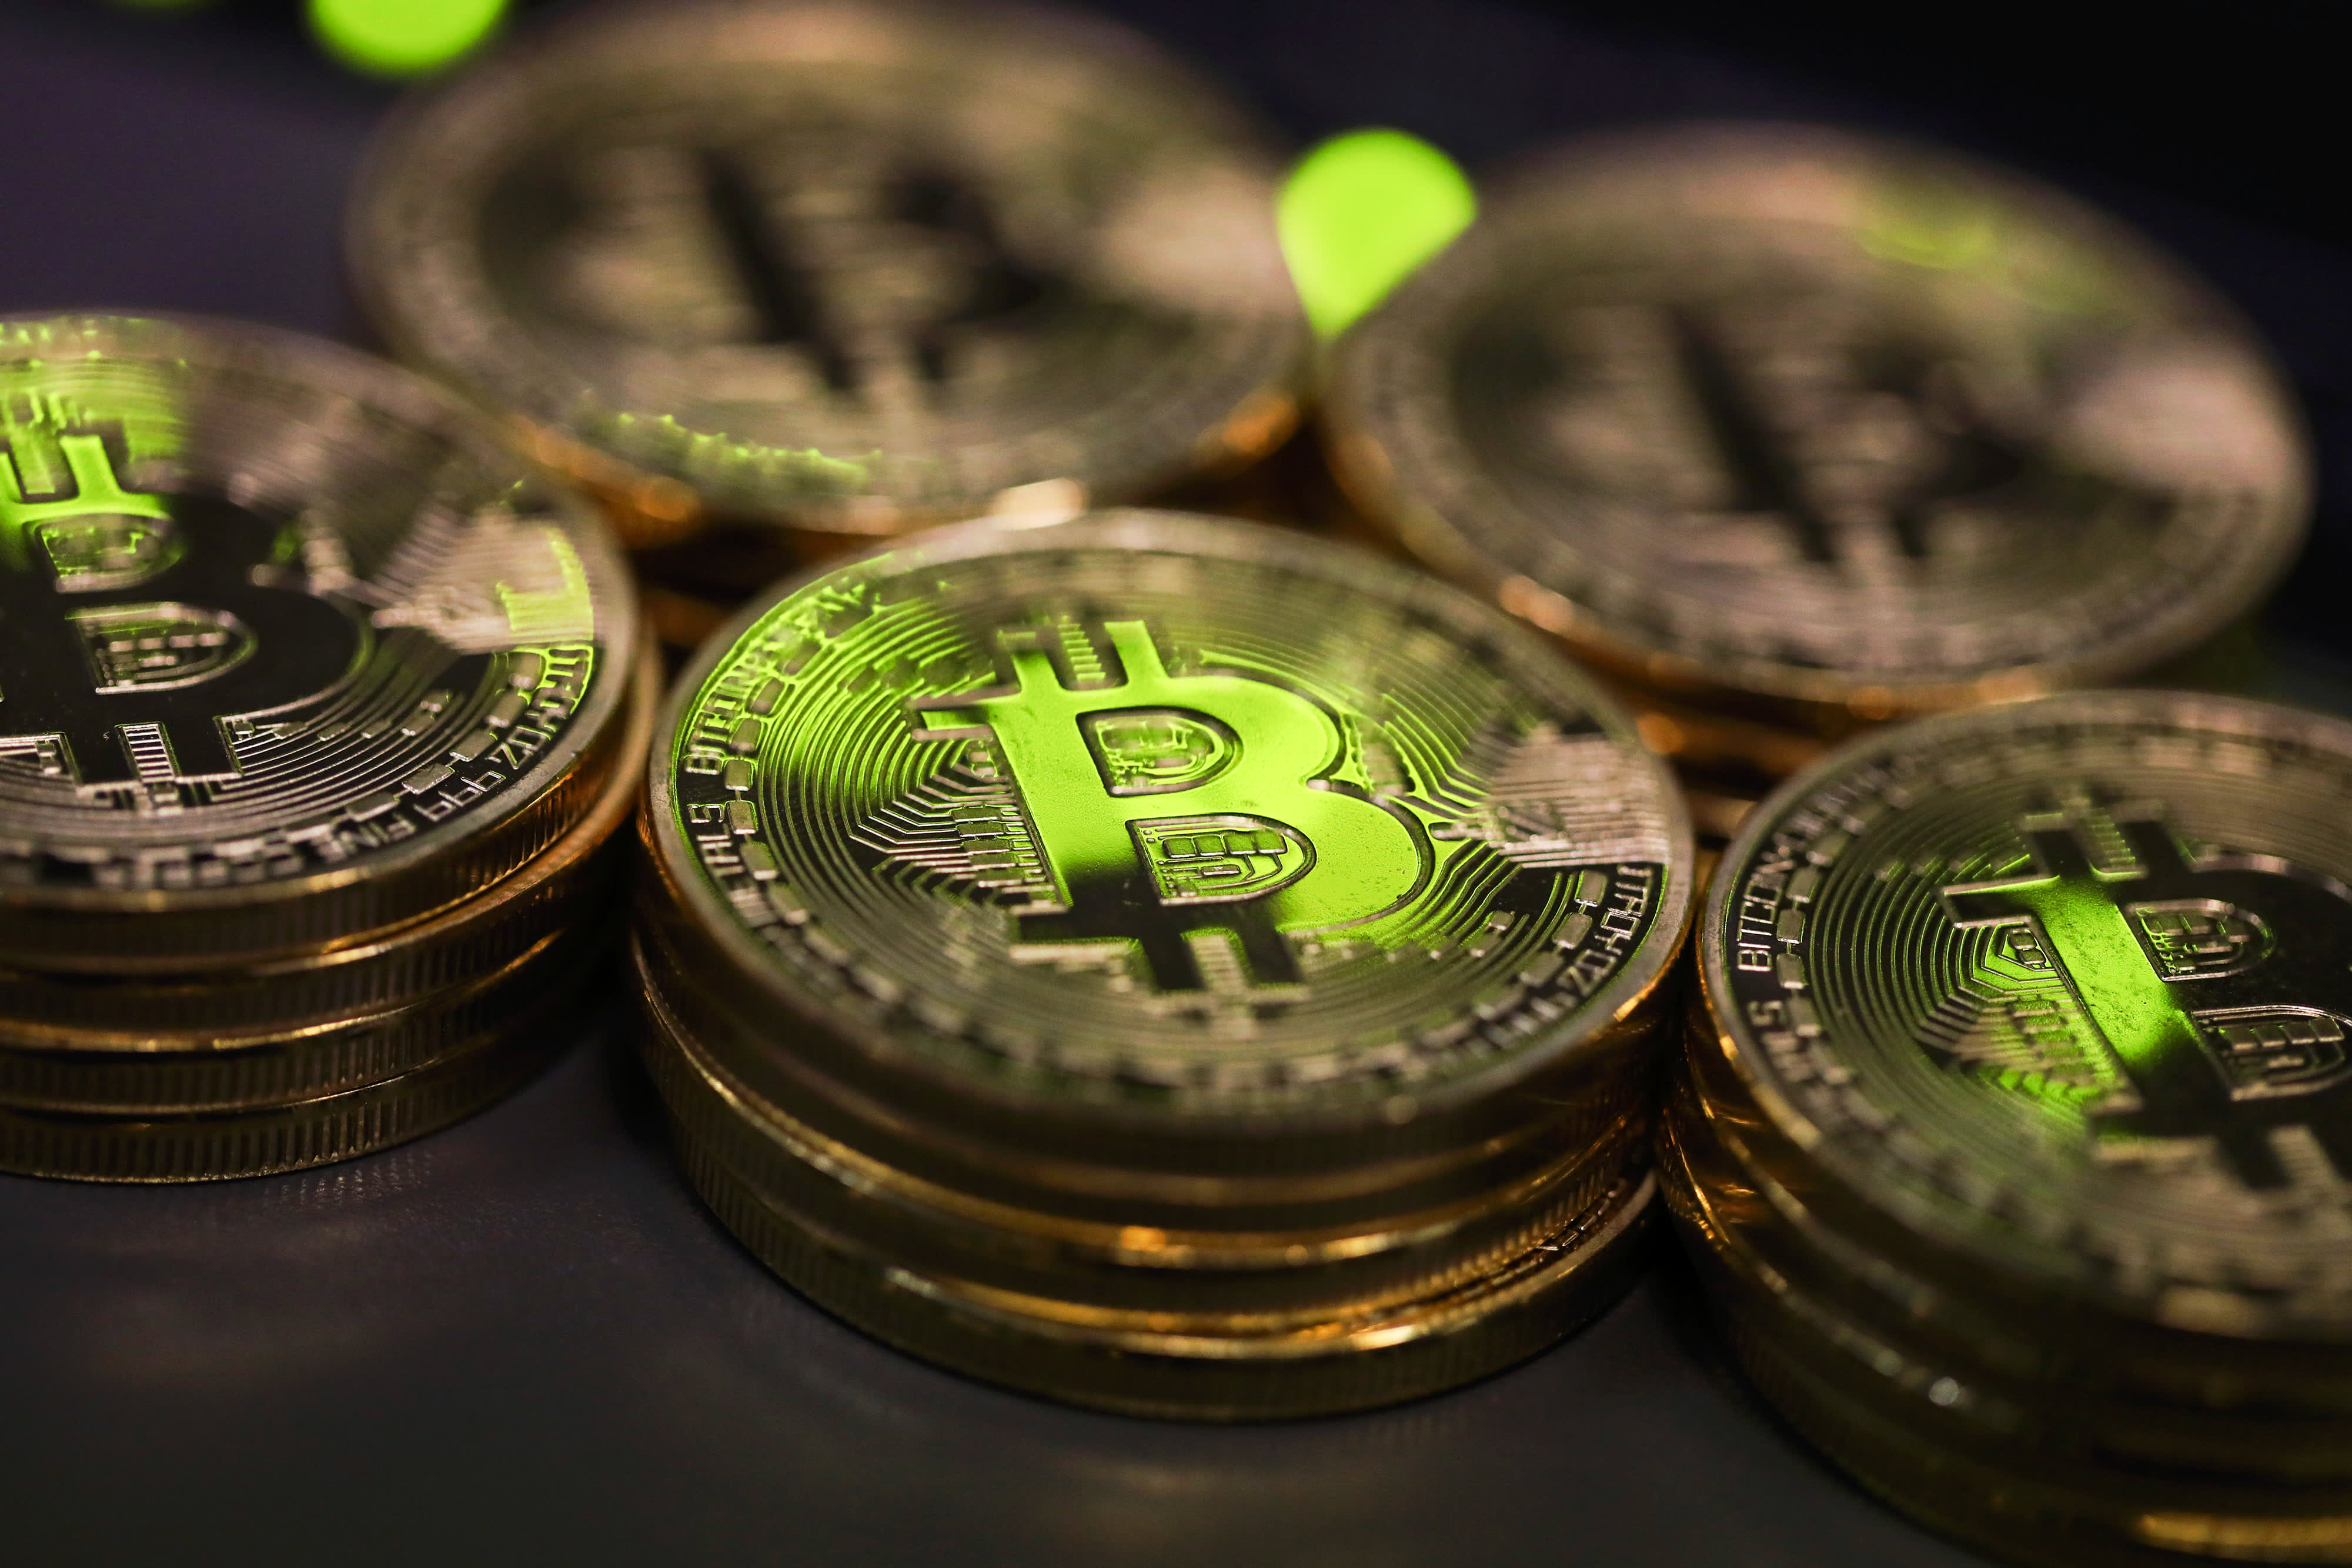 Bitcoin Risks ‘Spiraling Price’ on Environment, Regulatory Concerns: BCA Research